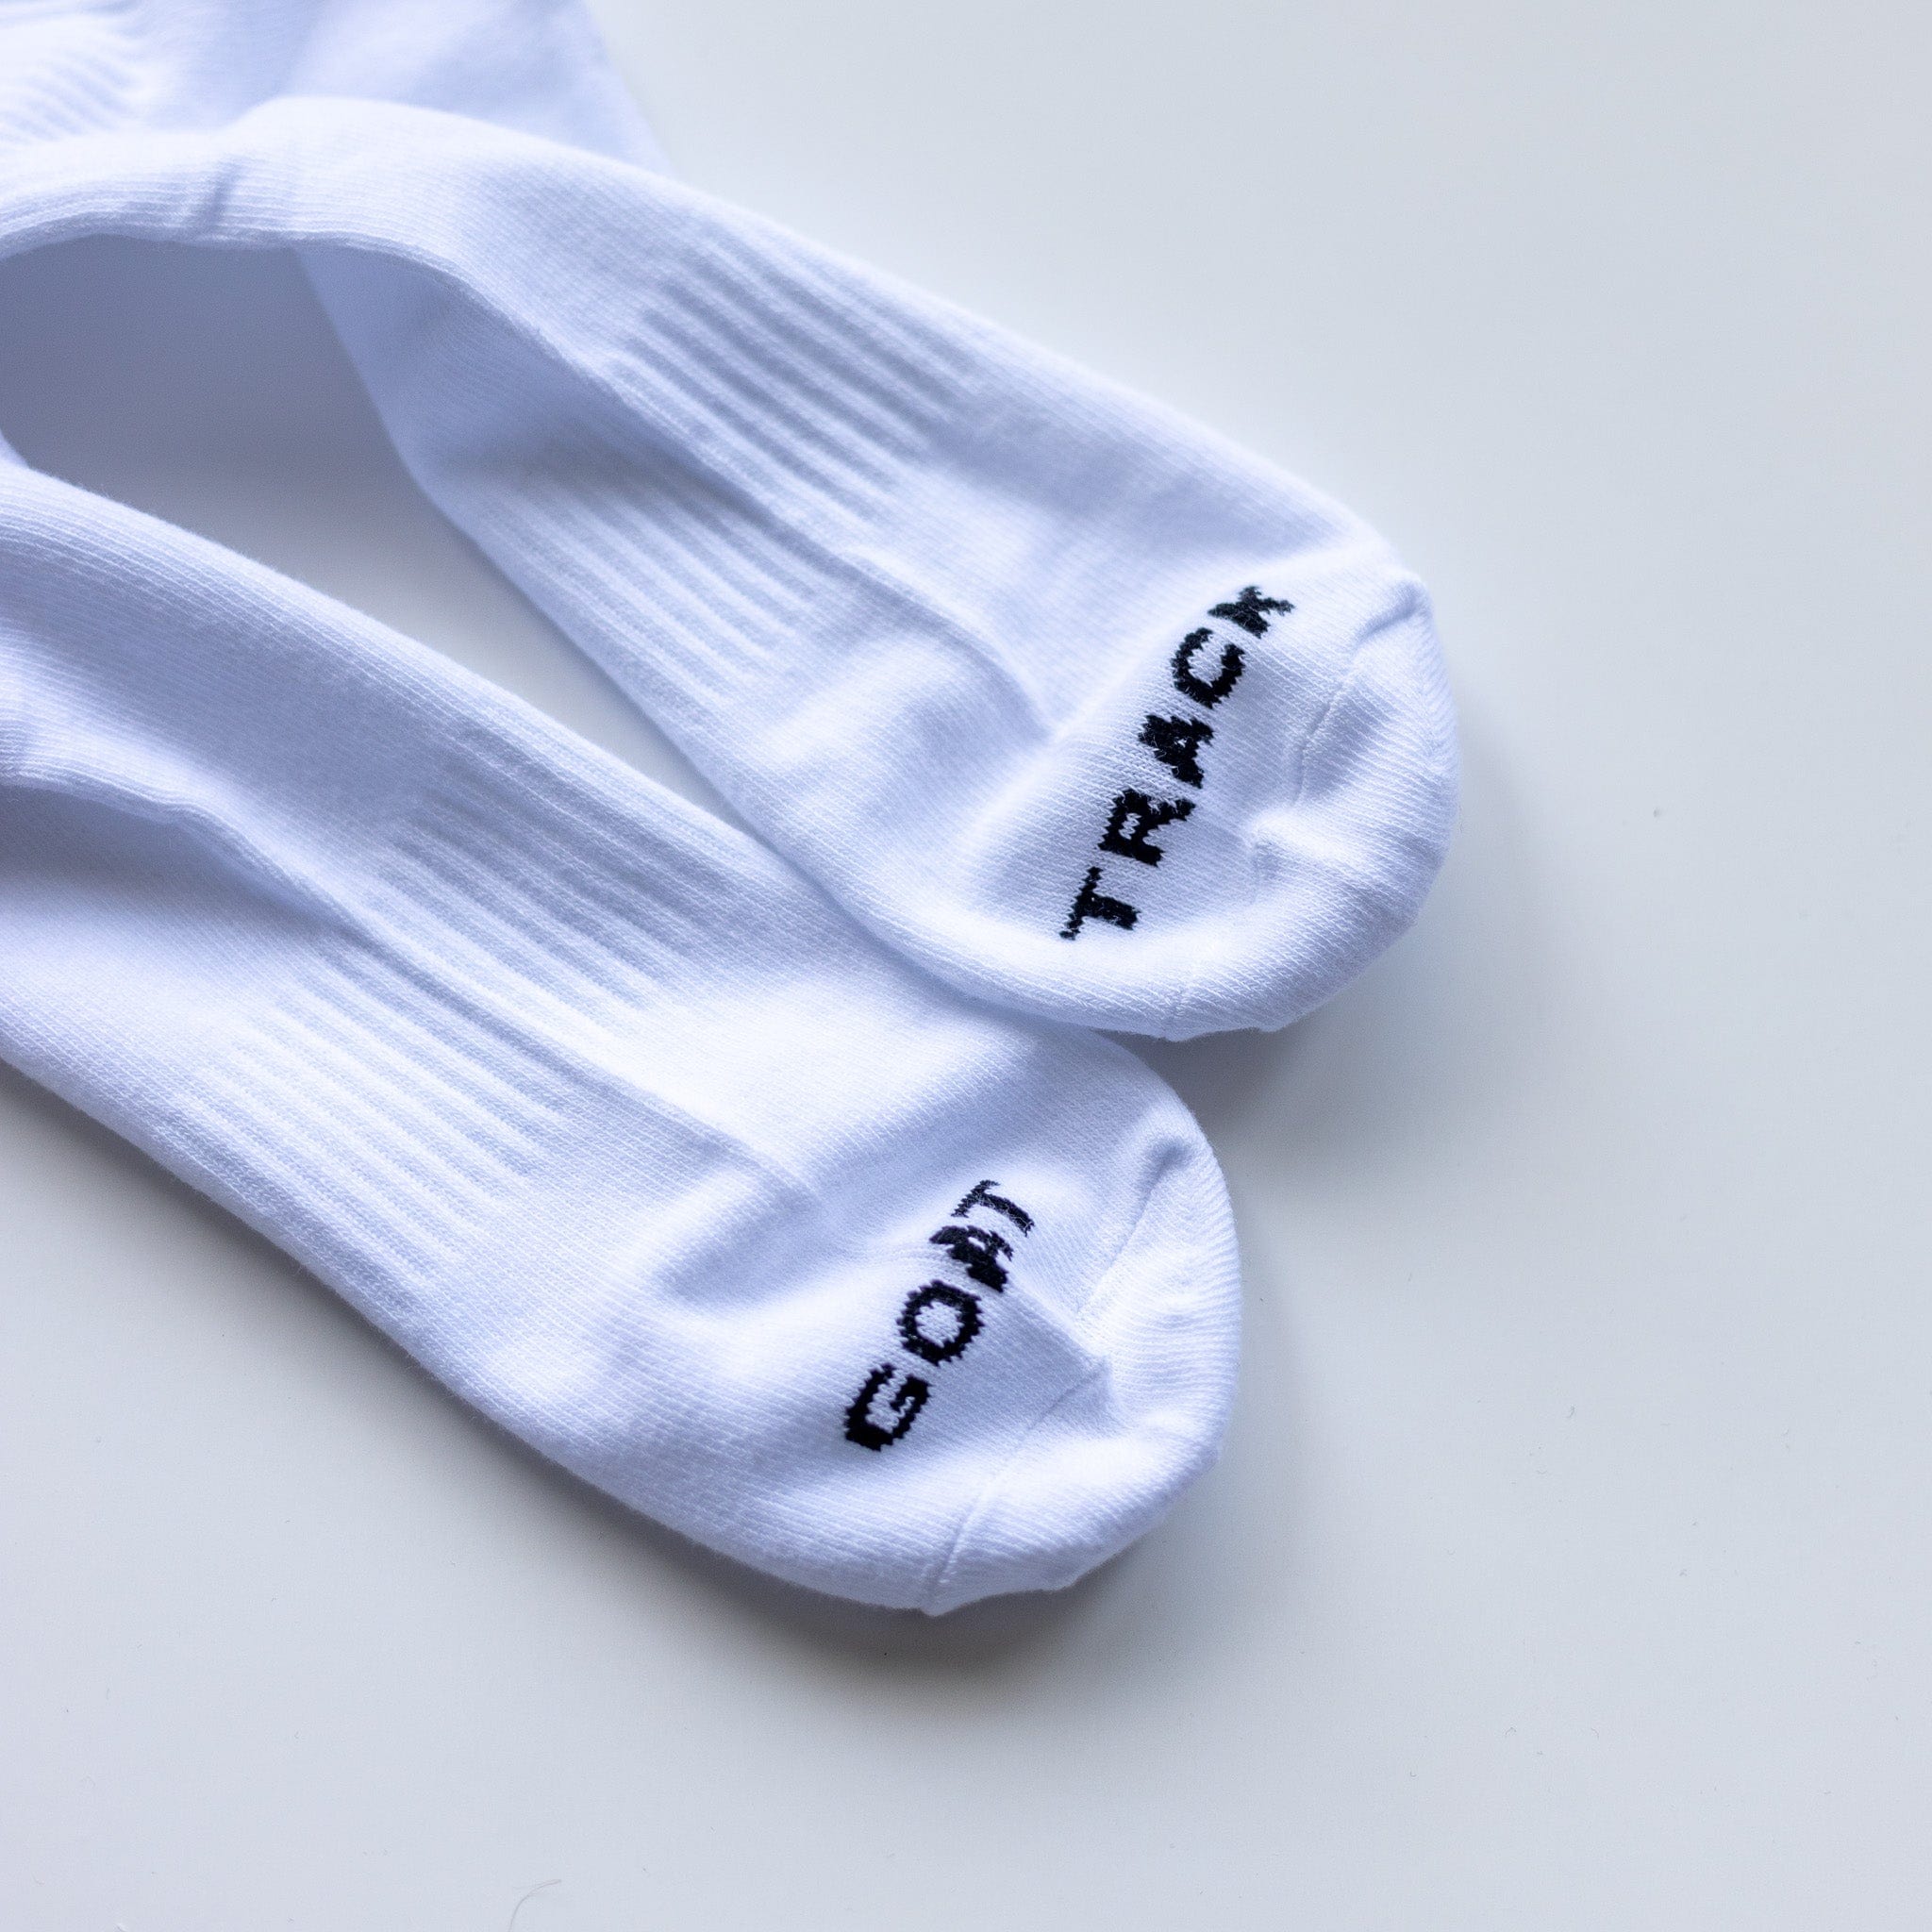 GT Everyday Socks socks Canada-Golf-Lifestyle-Clothing-Brand